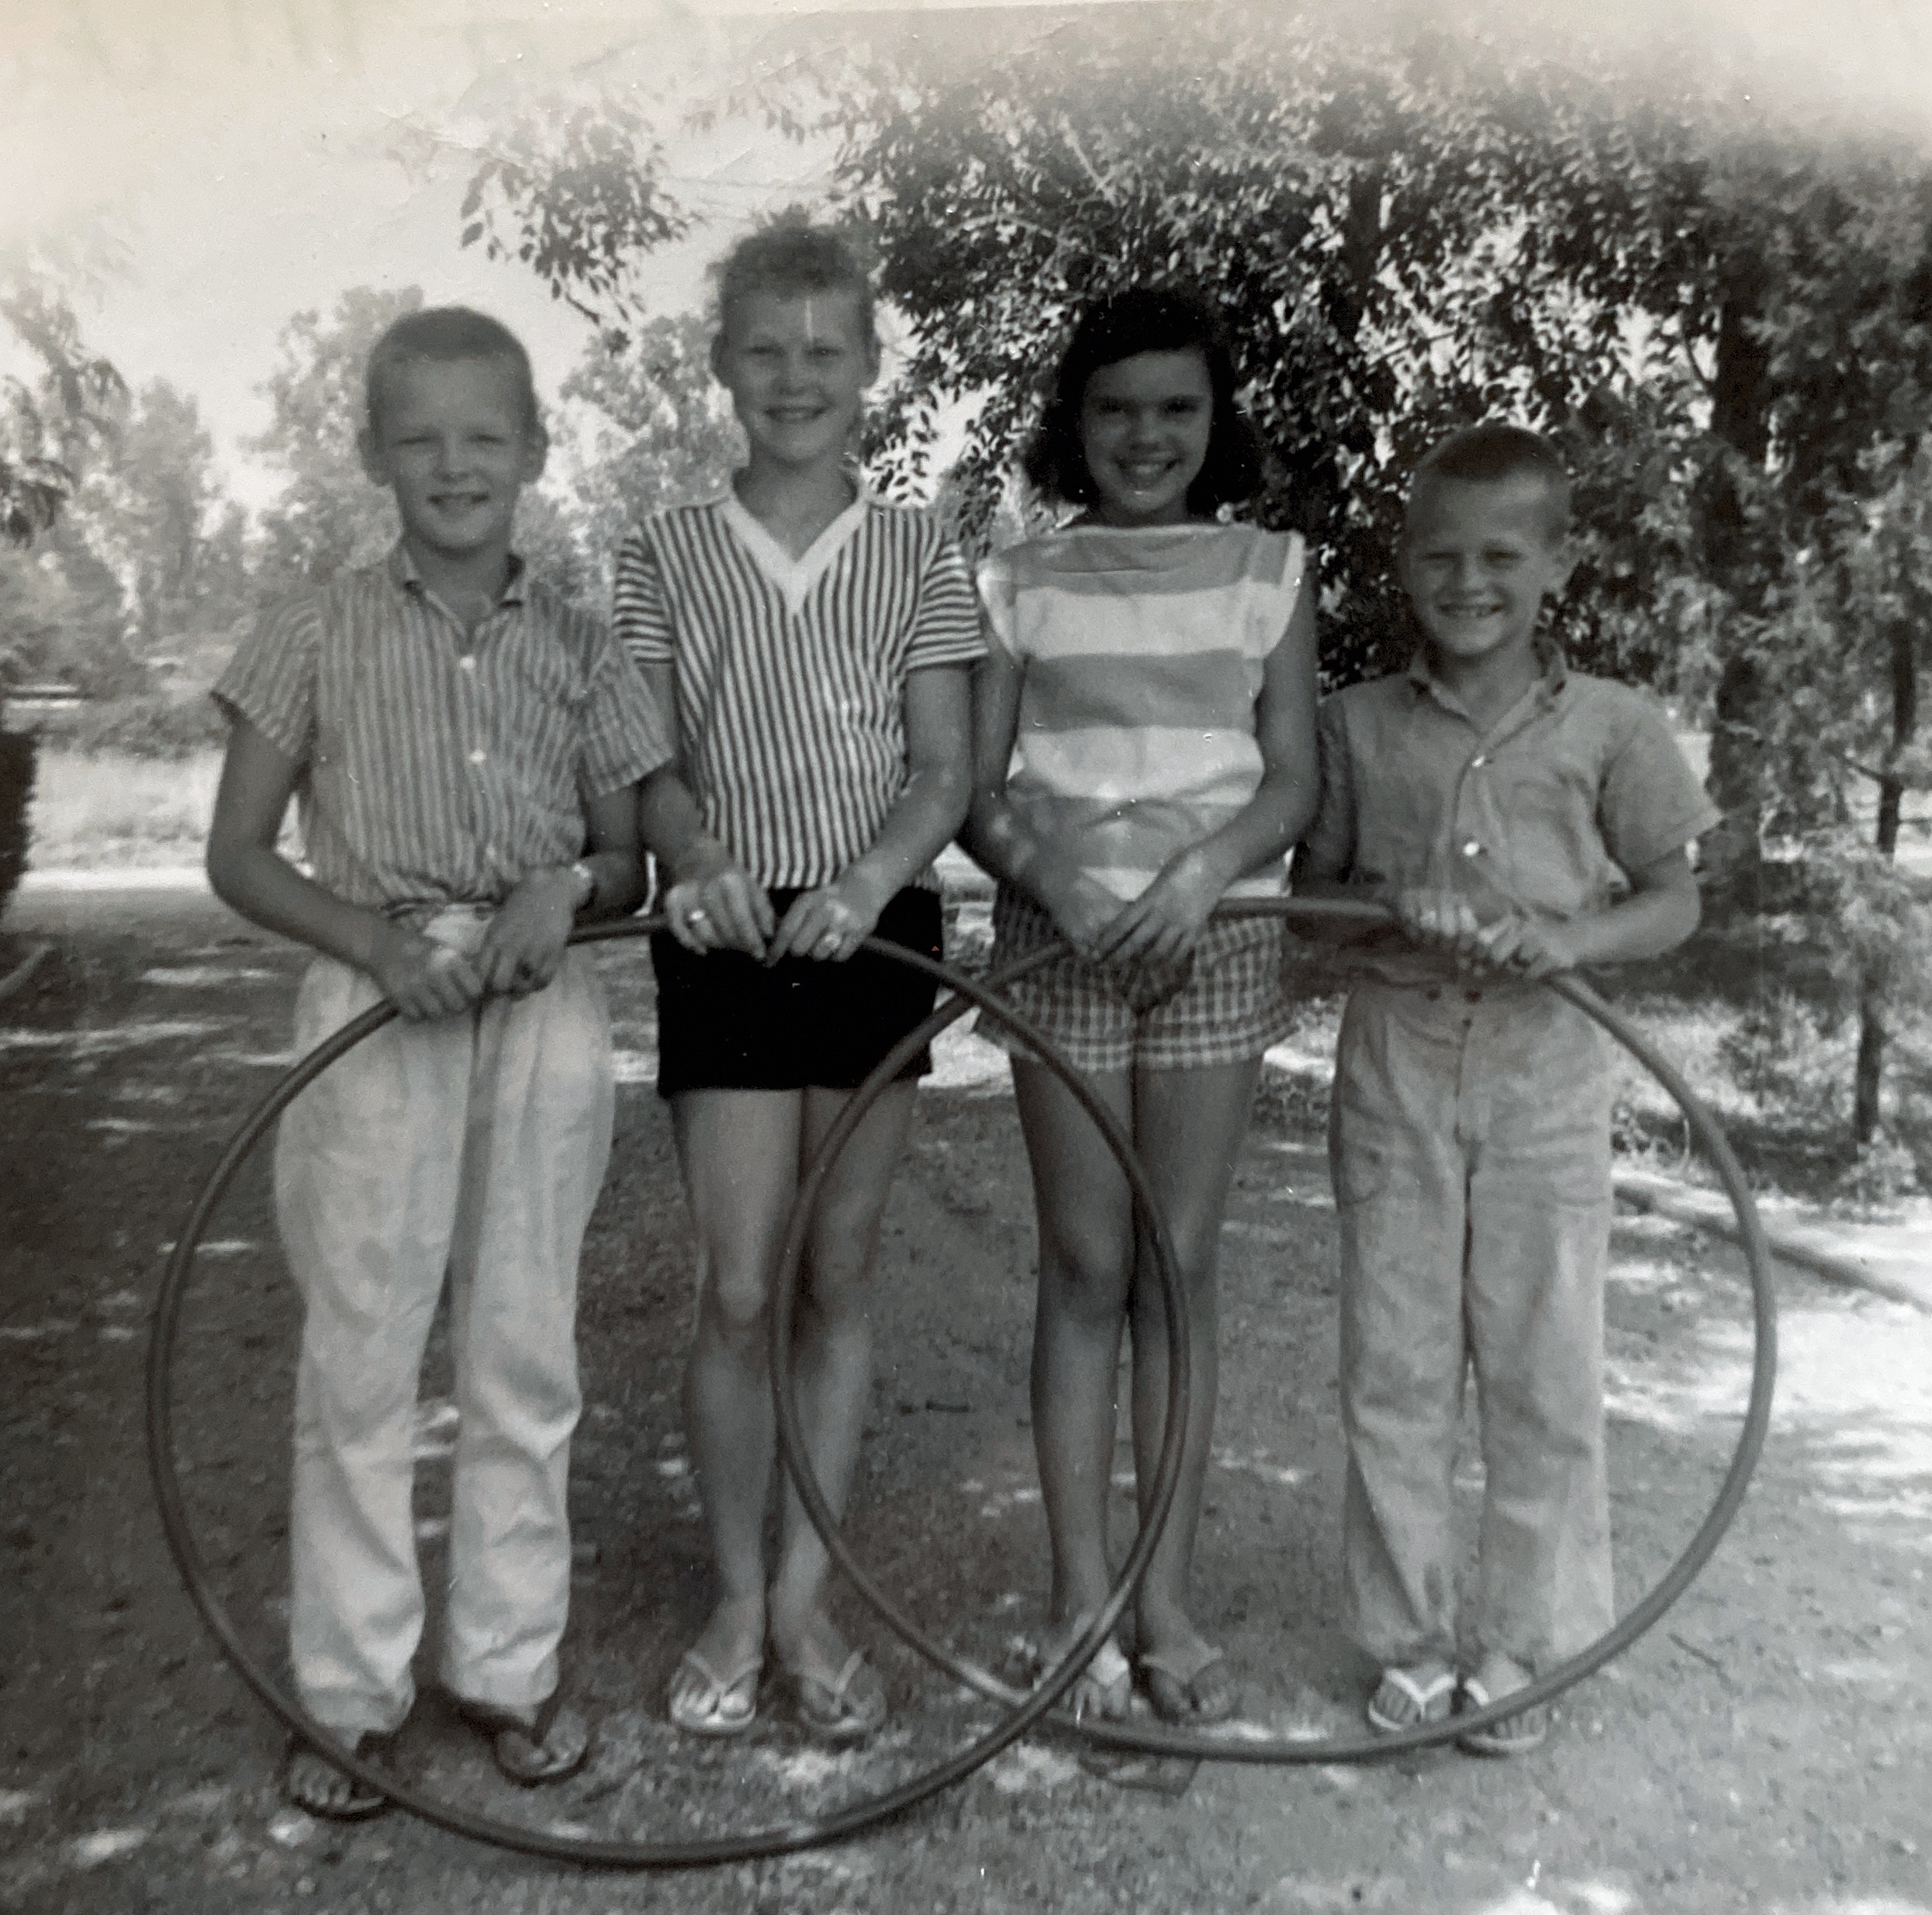 Mark and Pat Davey, a friend, Linda, and Mike Davey with Hula Hoops. Fontana, California.
Circa 1958